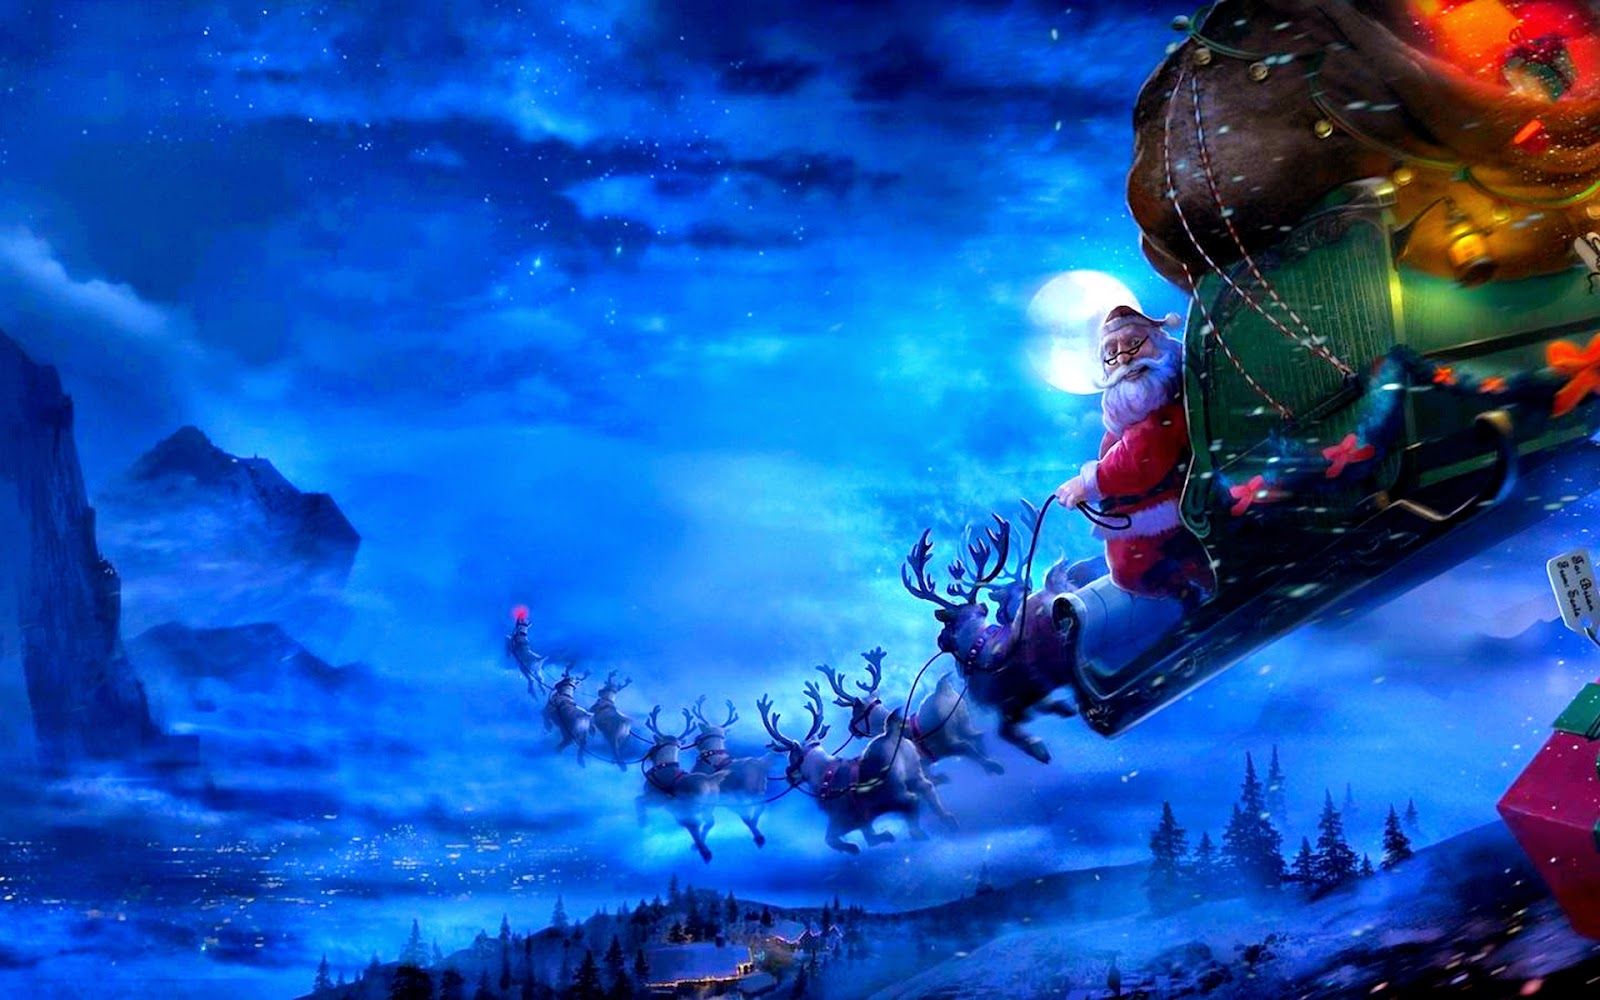 Santa Claus Sleigh And Reindeer Riding His